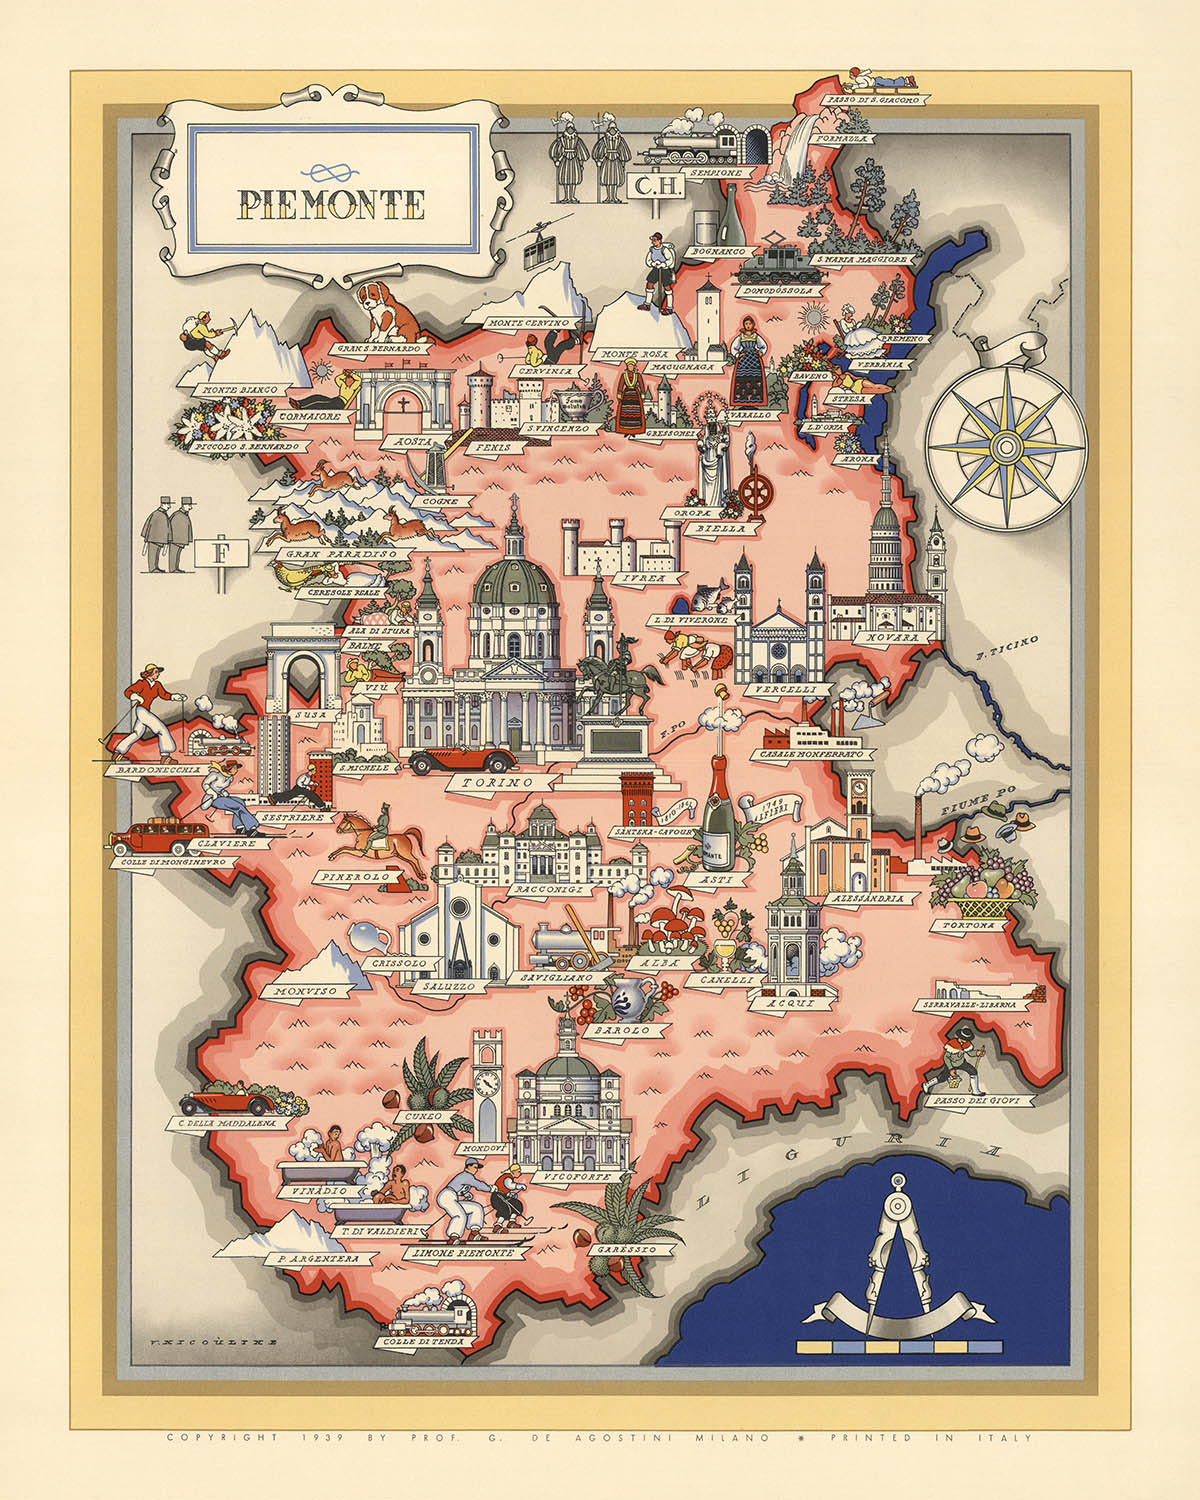 Ancienne carte picturale du Piémont par De Agostini, 1938 : Turin, Novare, Vercelli, Biella, Alessandria